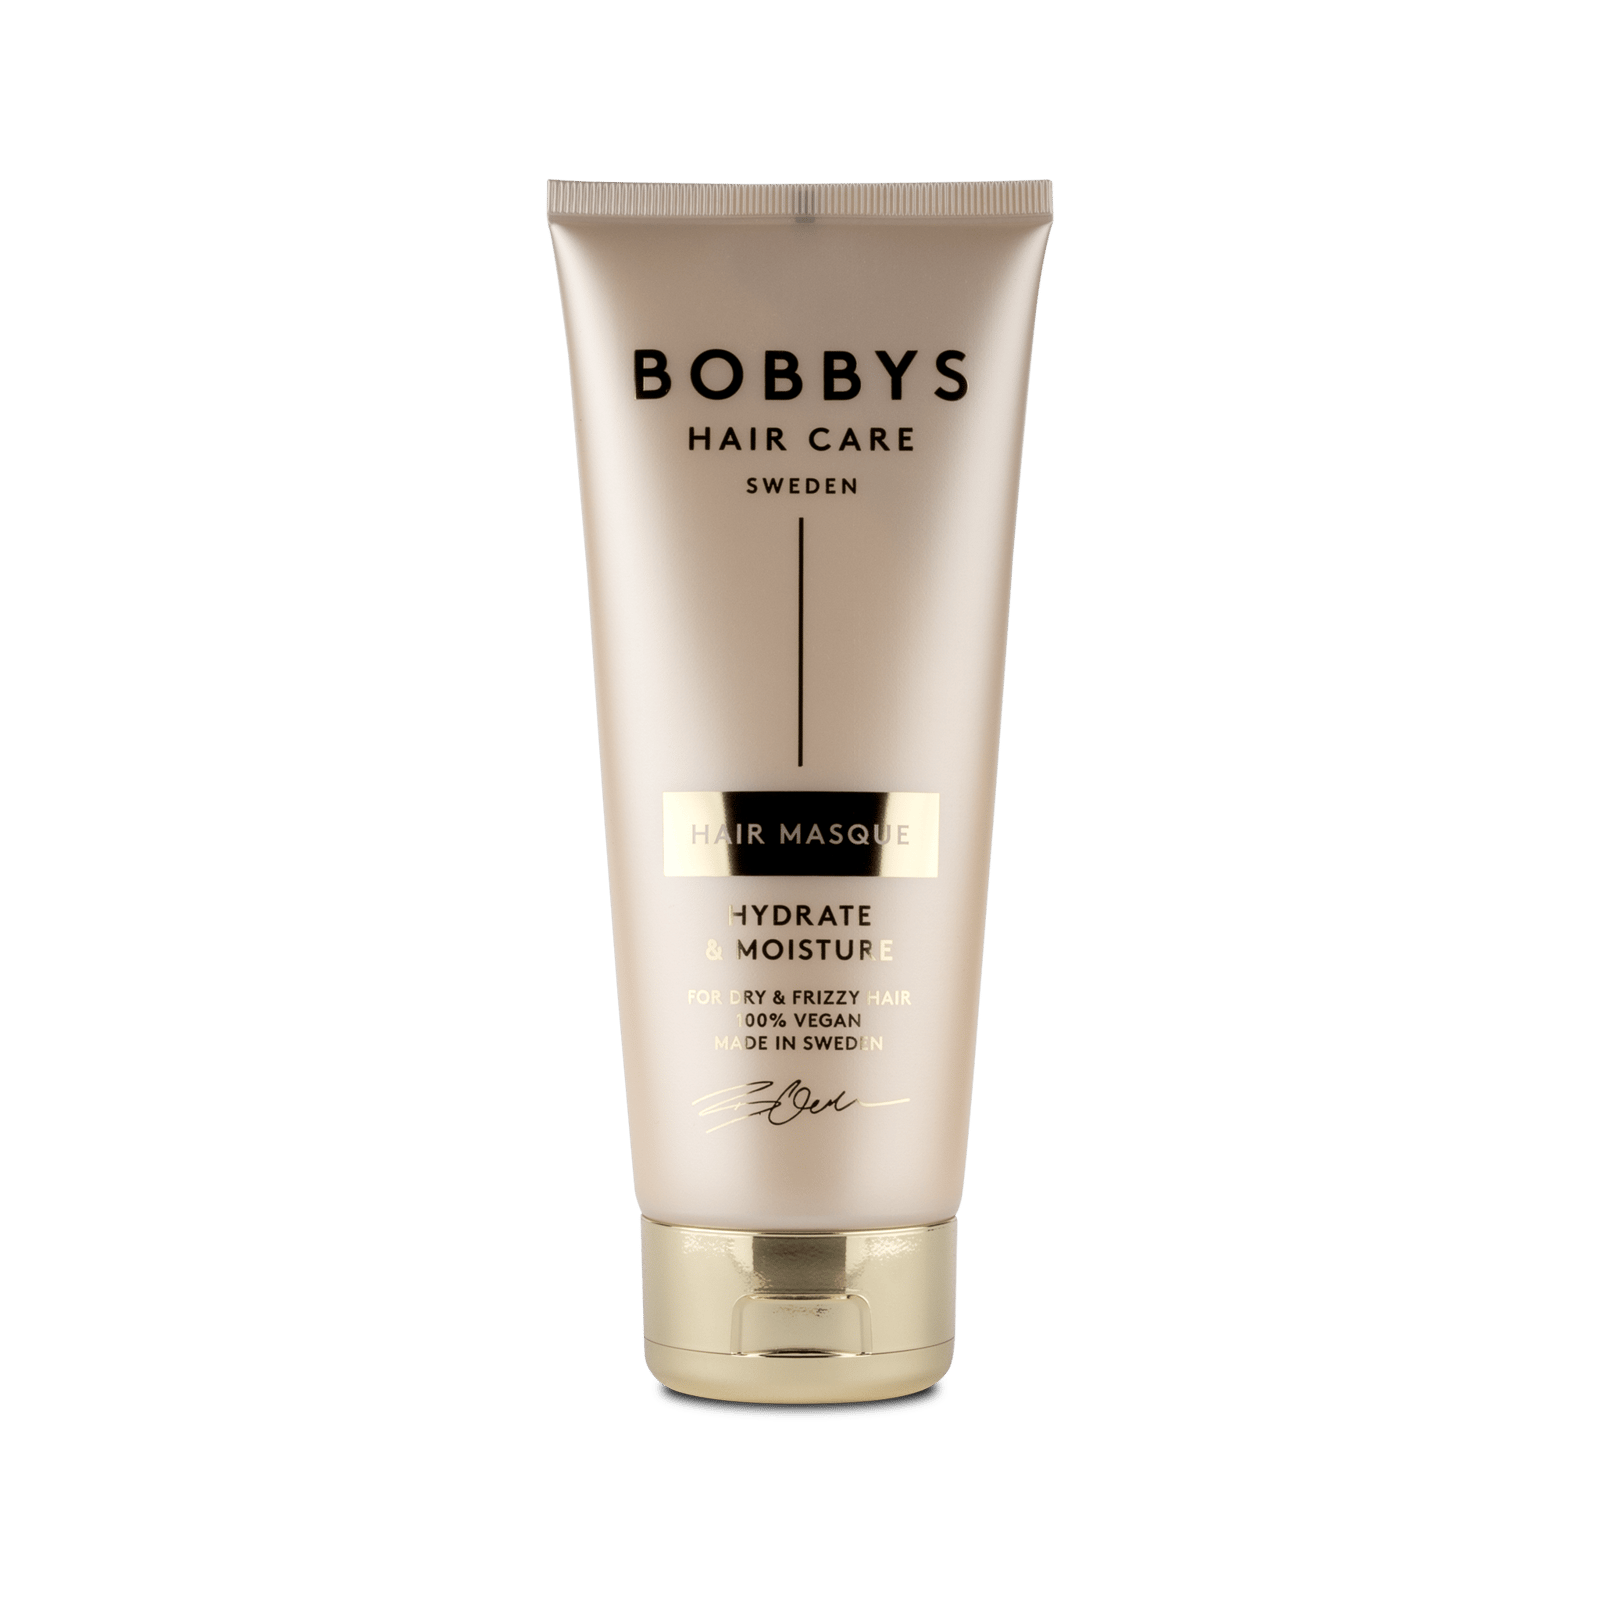 Bobbys Hair Care Hydrate & Moisture Hair Masque 200 ml